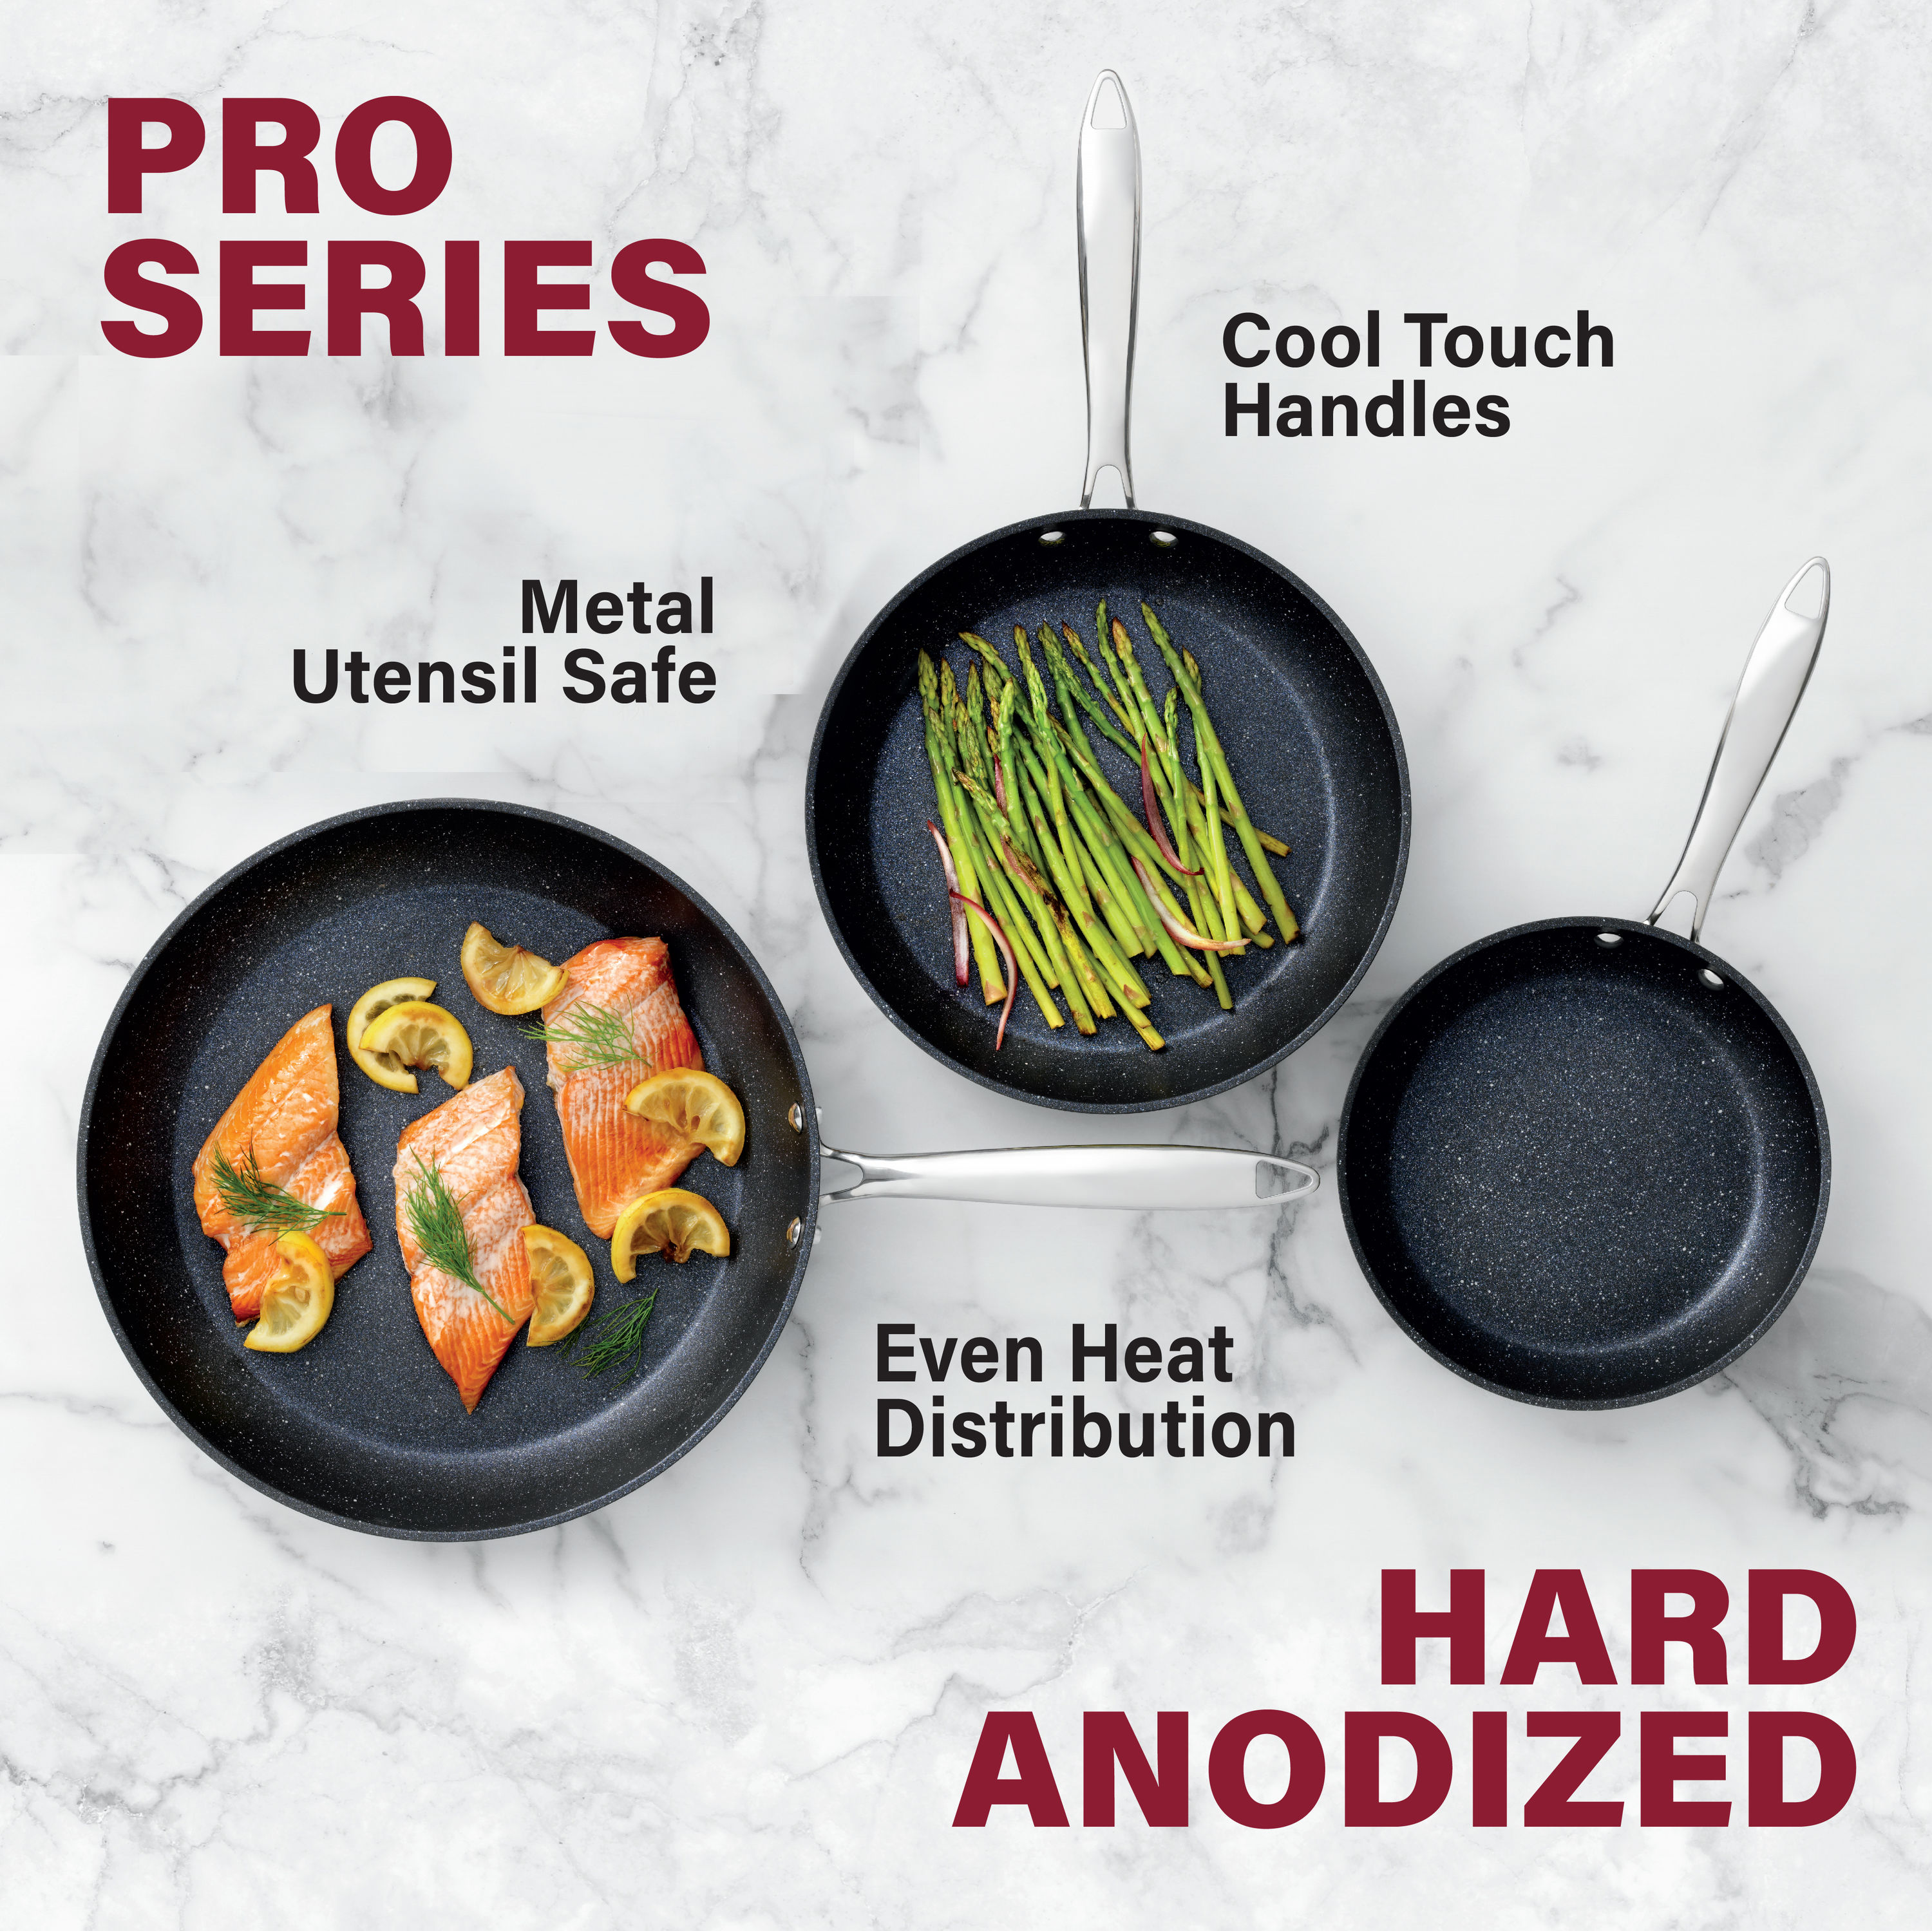 Granitestone Pro Hard Anodized 5 Piece Nonstick Cookware Set